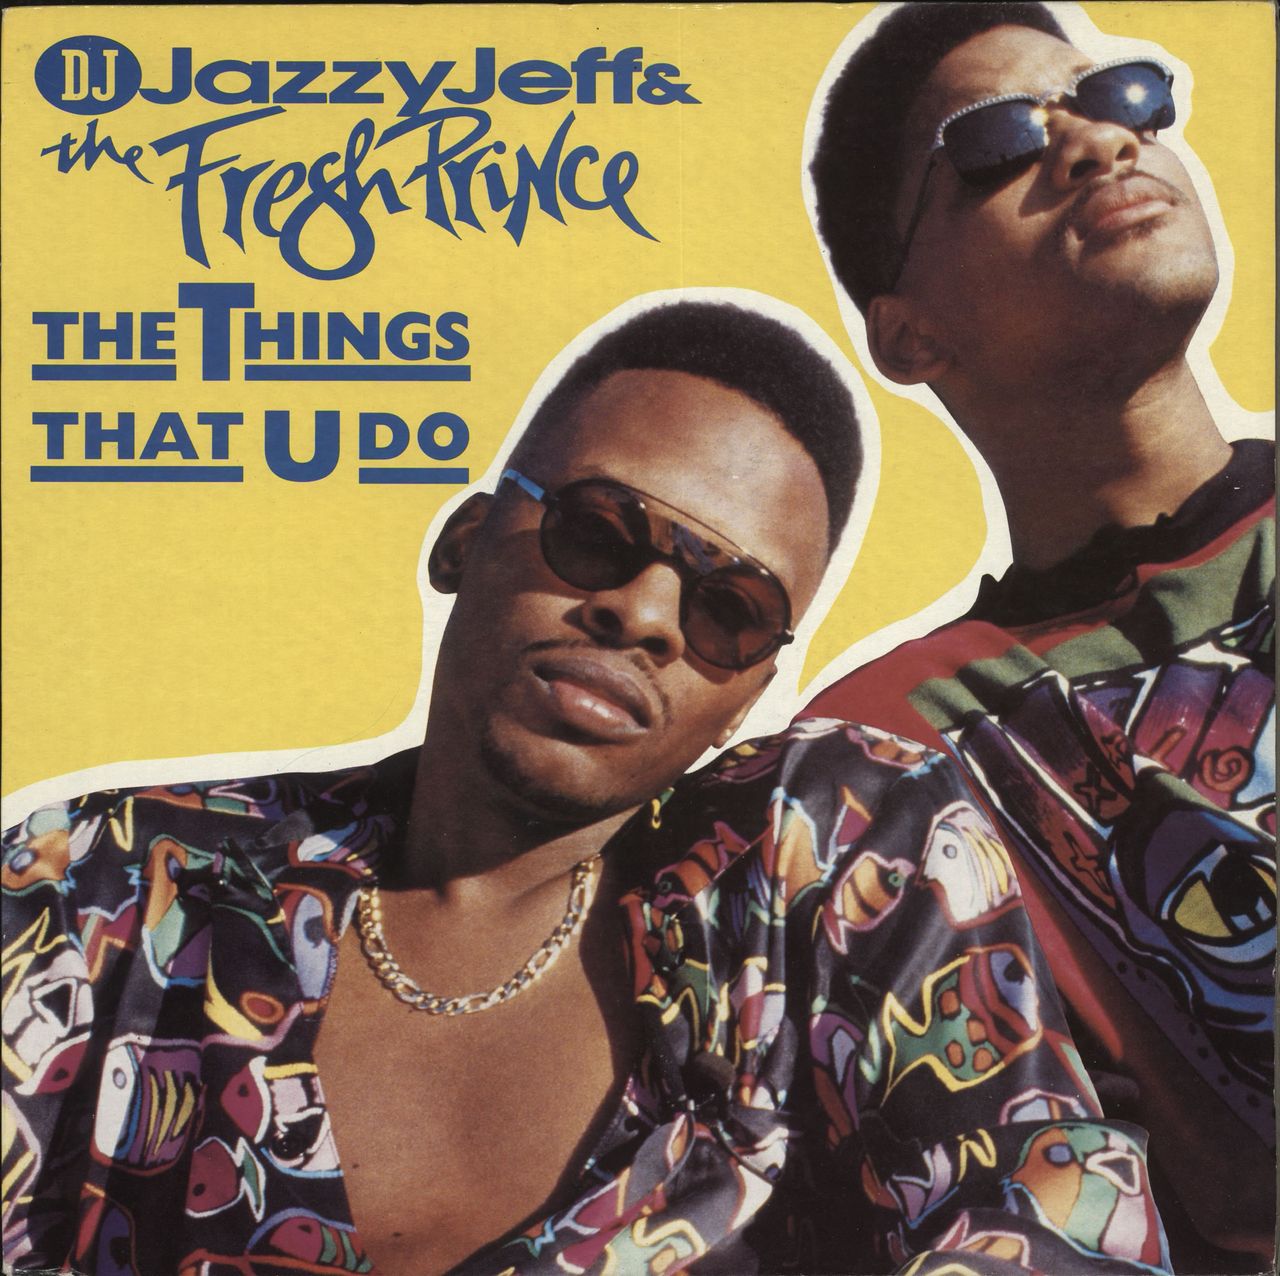 DJ Jazzy Jeff & The Fresh Prince The Things That U Do UK 12